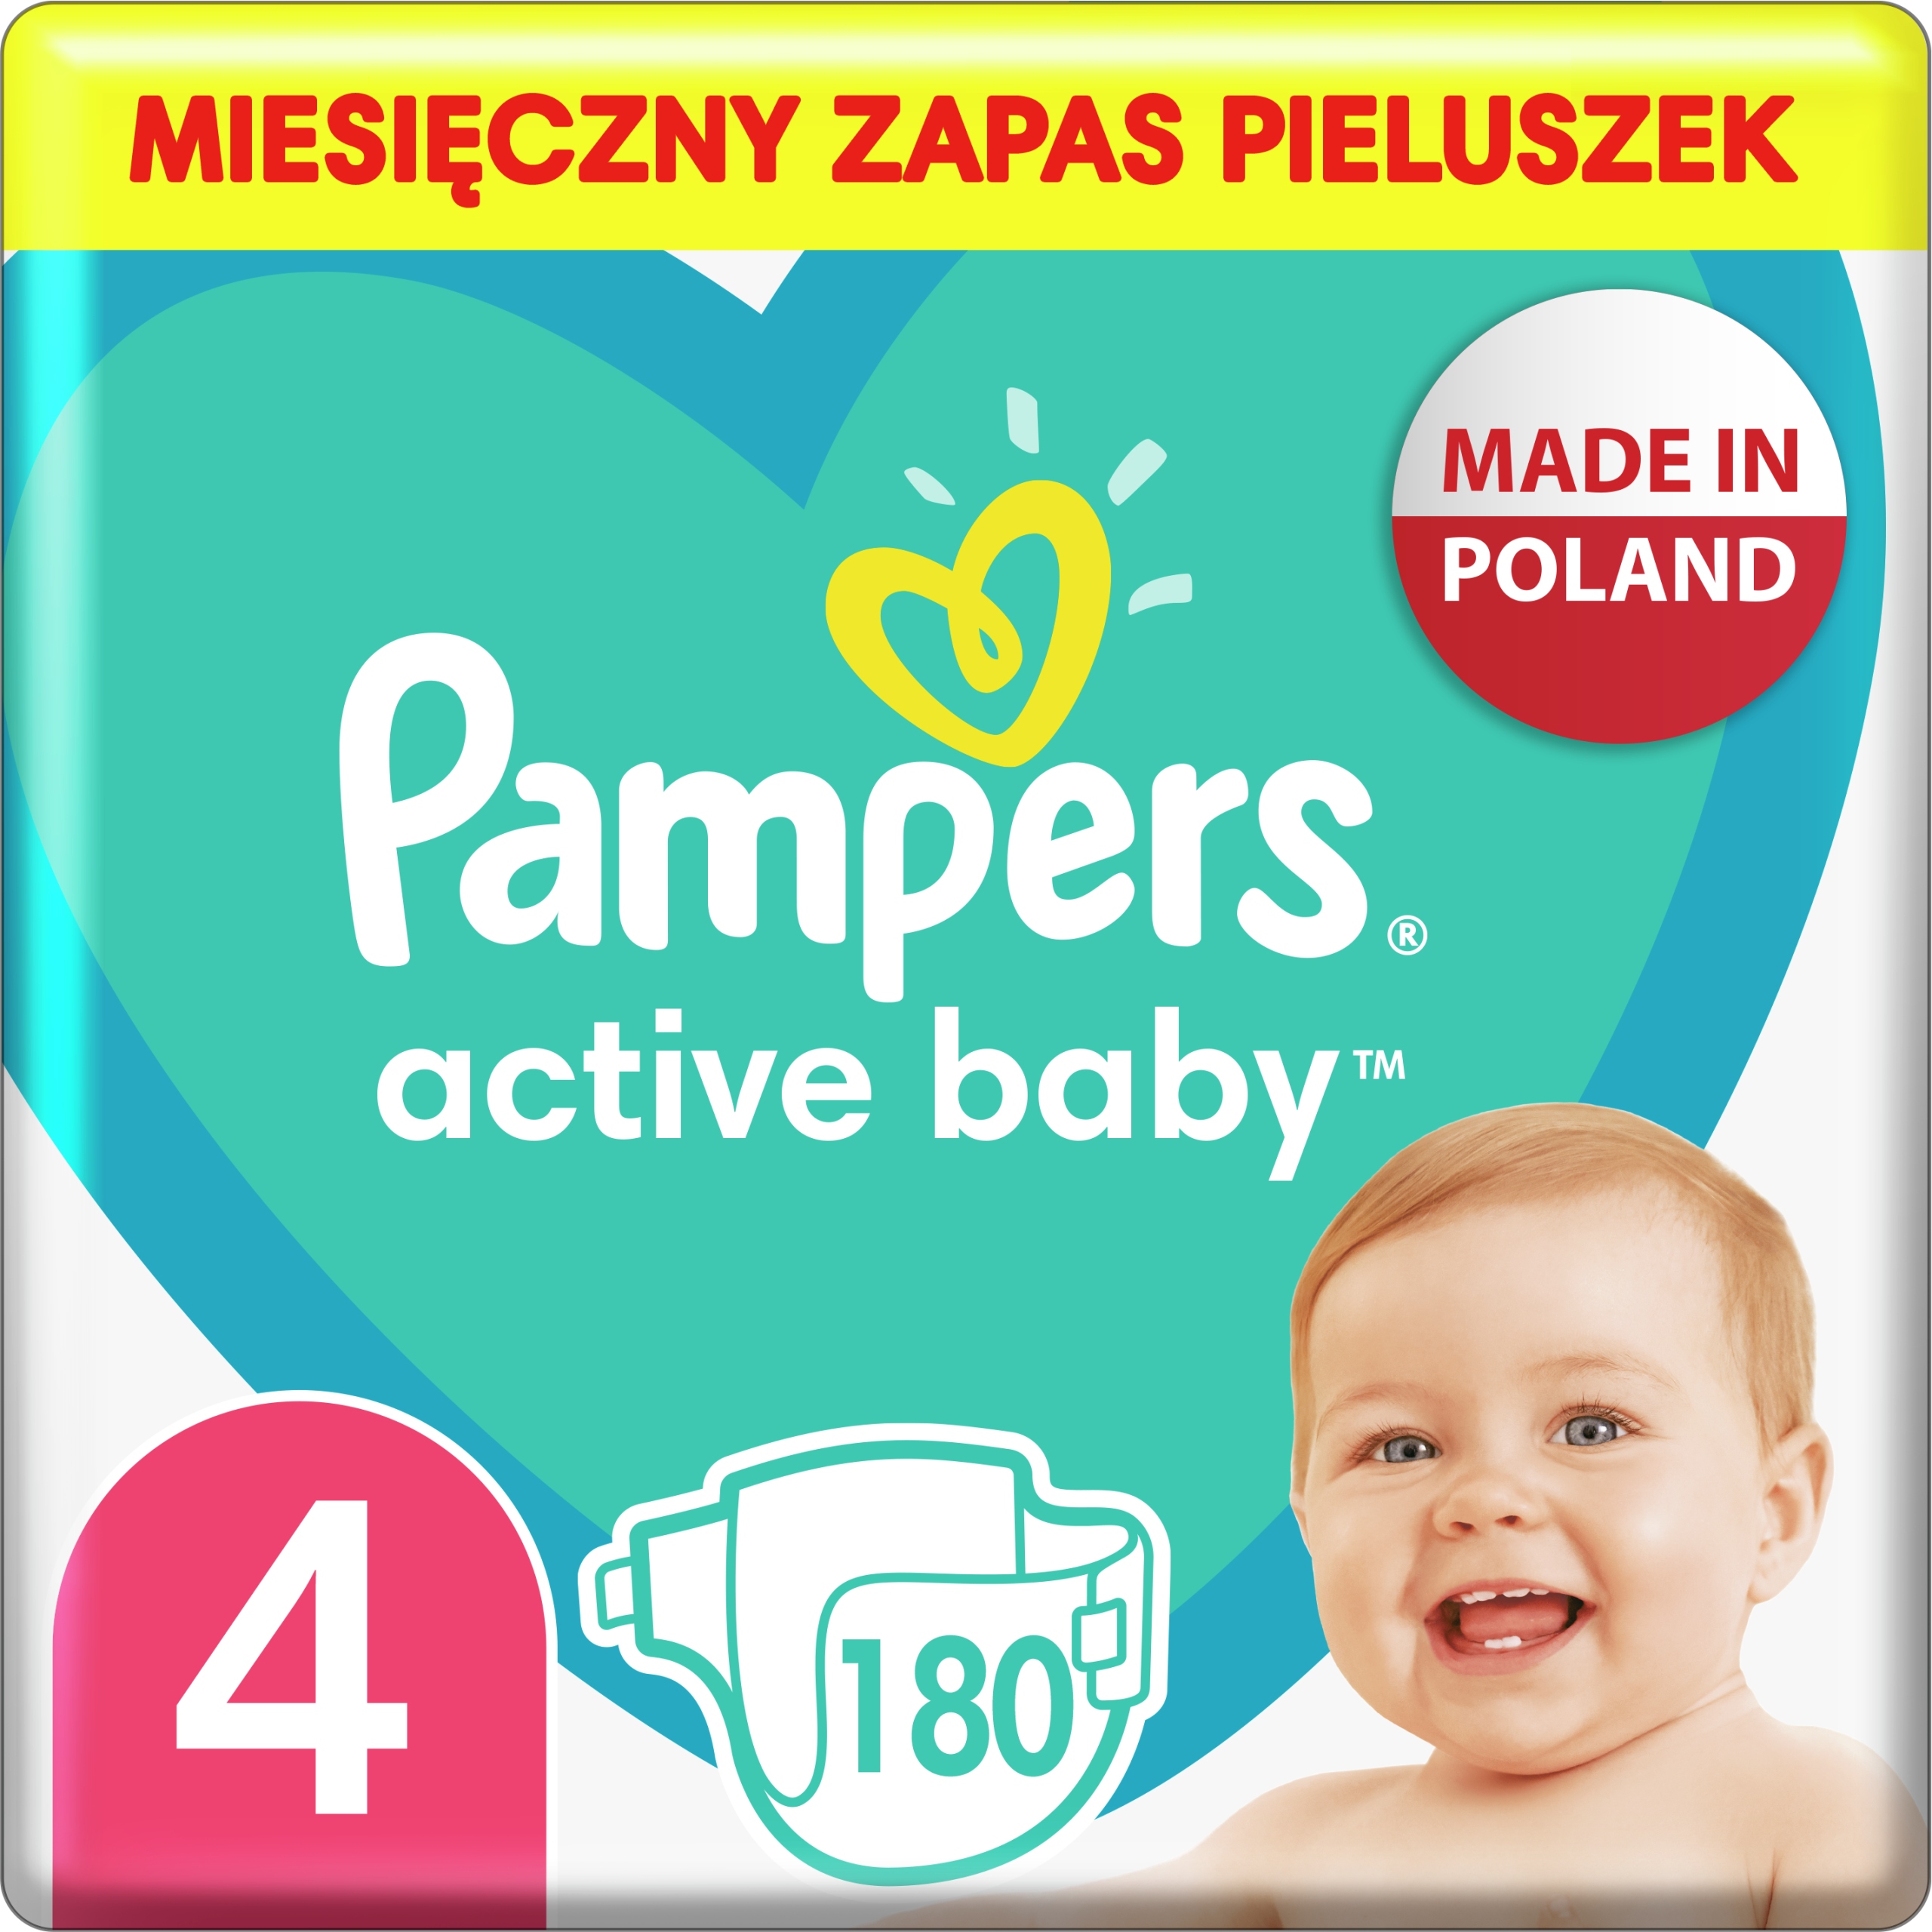 pampers site allegro.pl